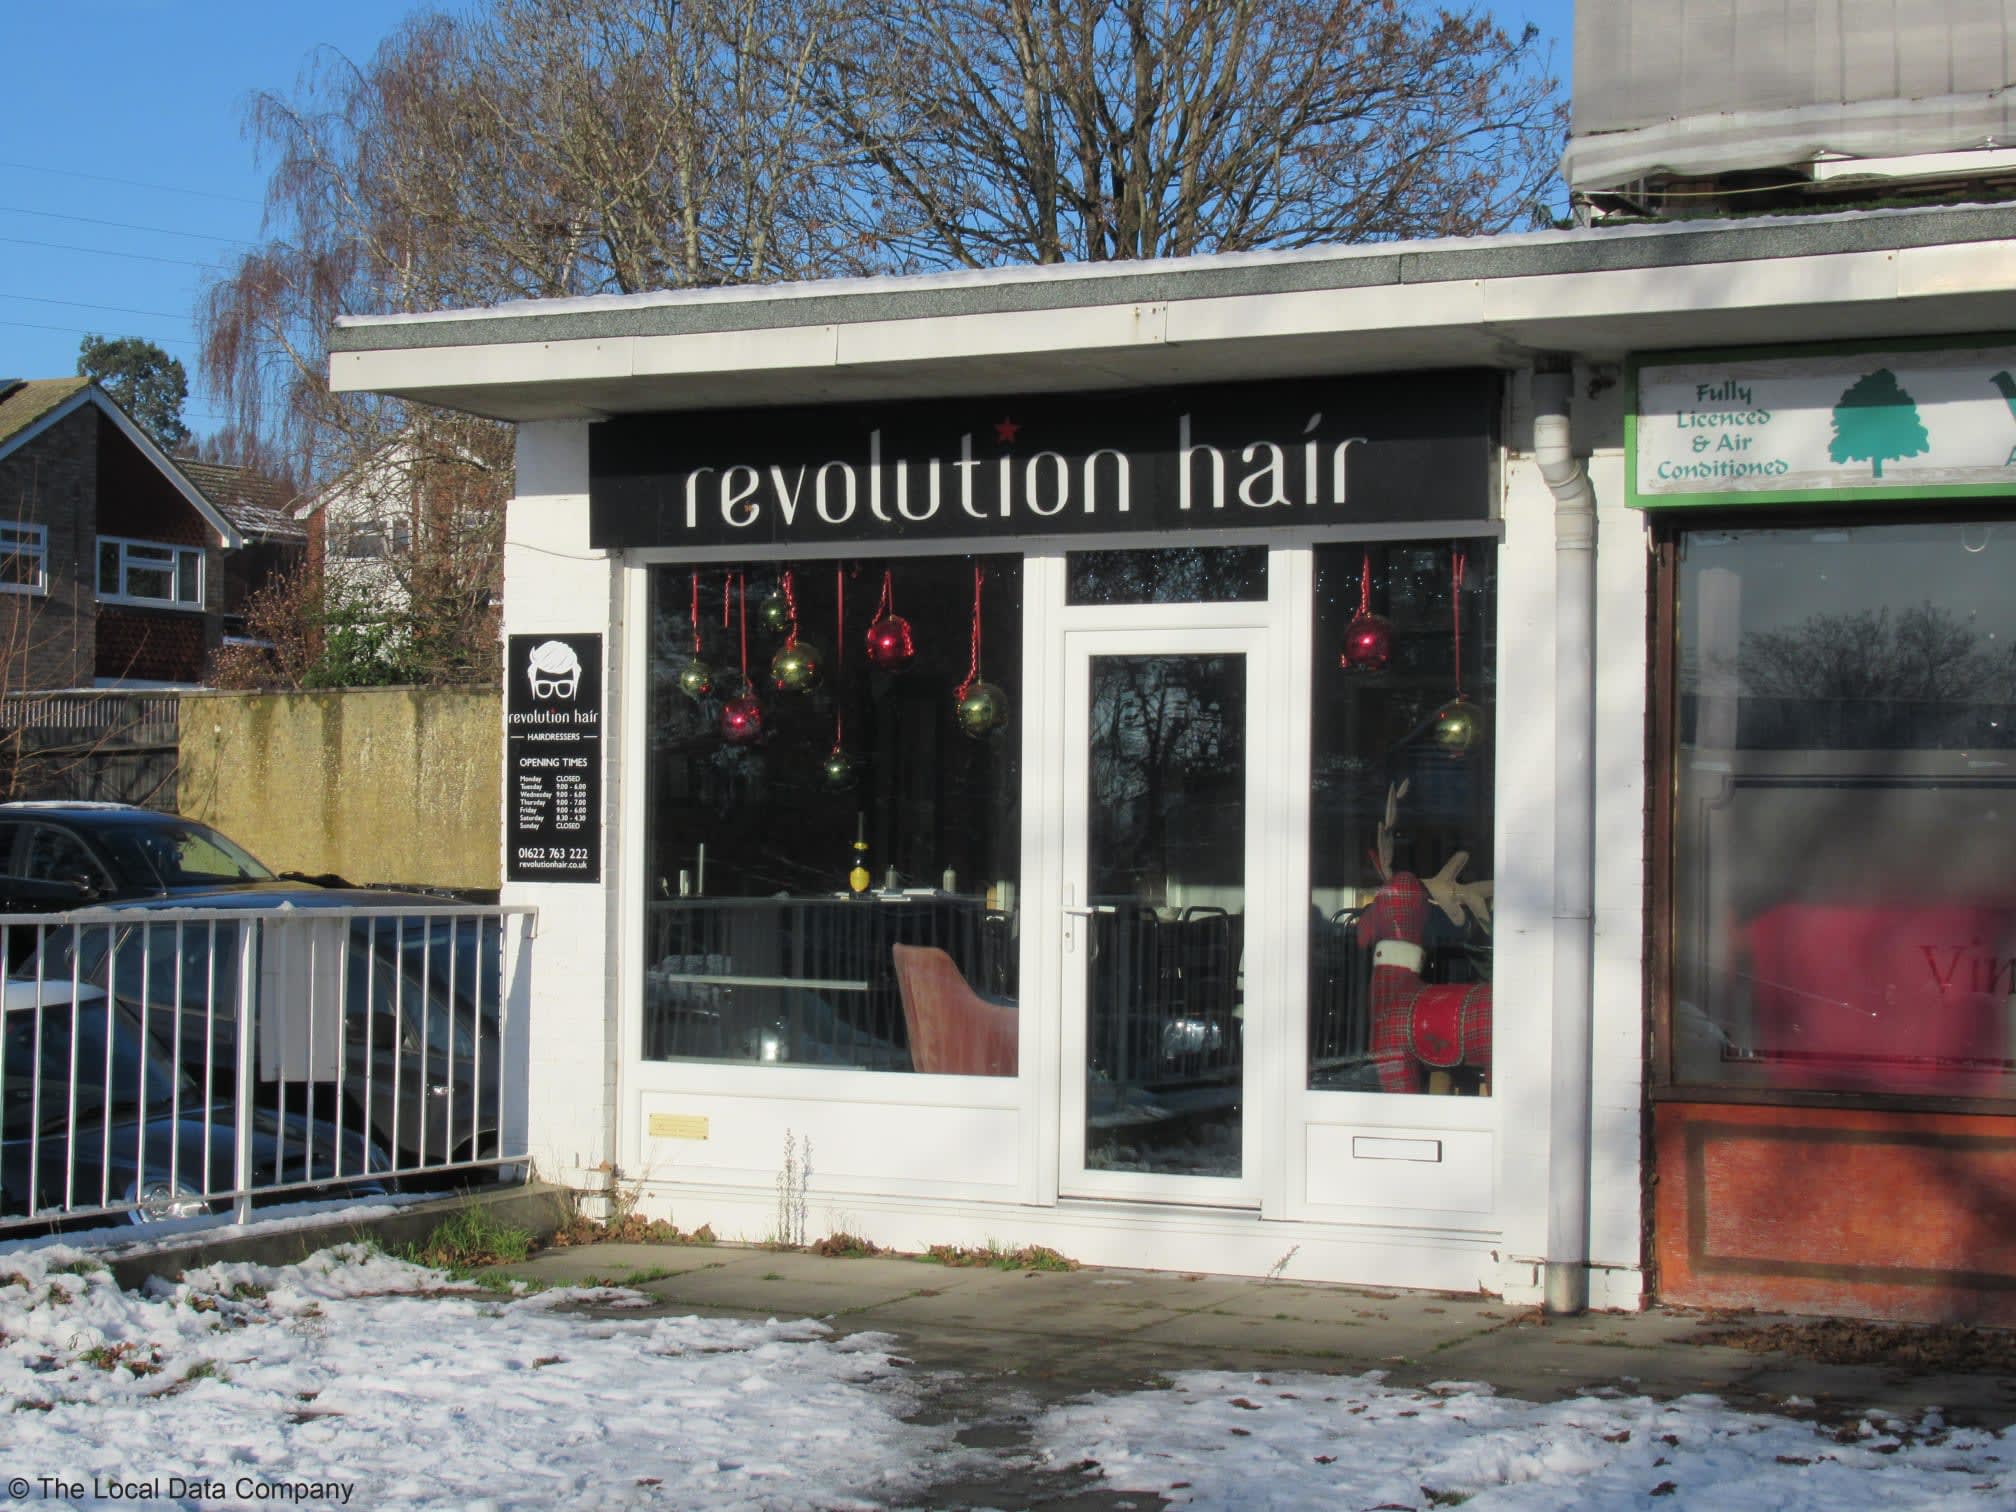 Revolution Hair Maidstone 01622 763222